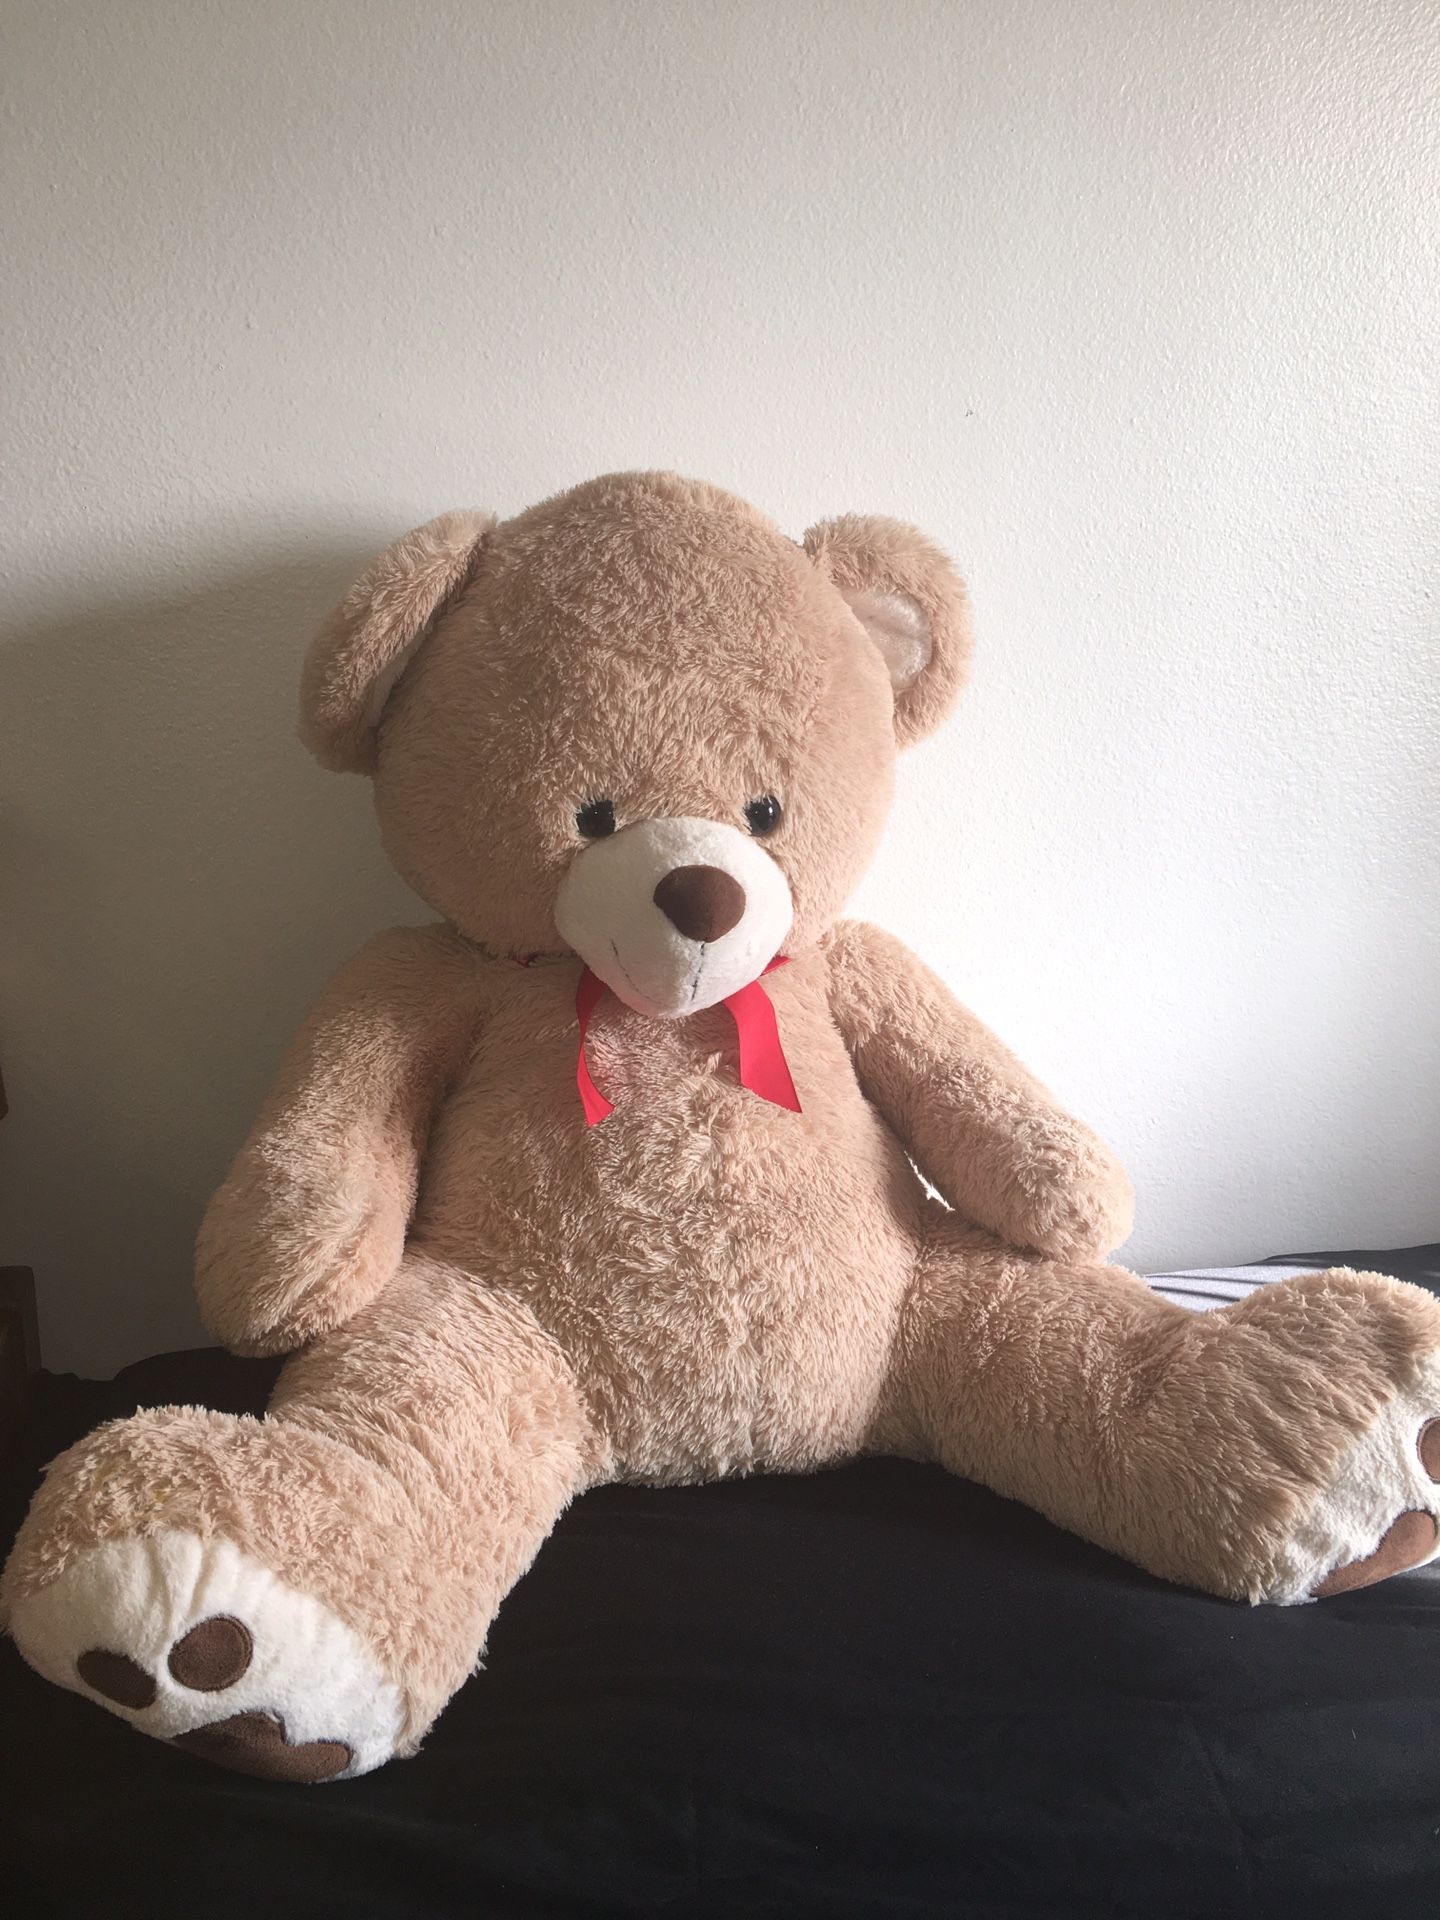 Big Brown Stuffed Teddy Bear